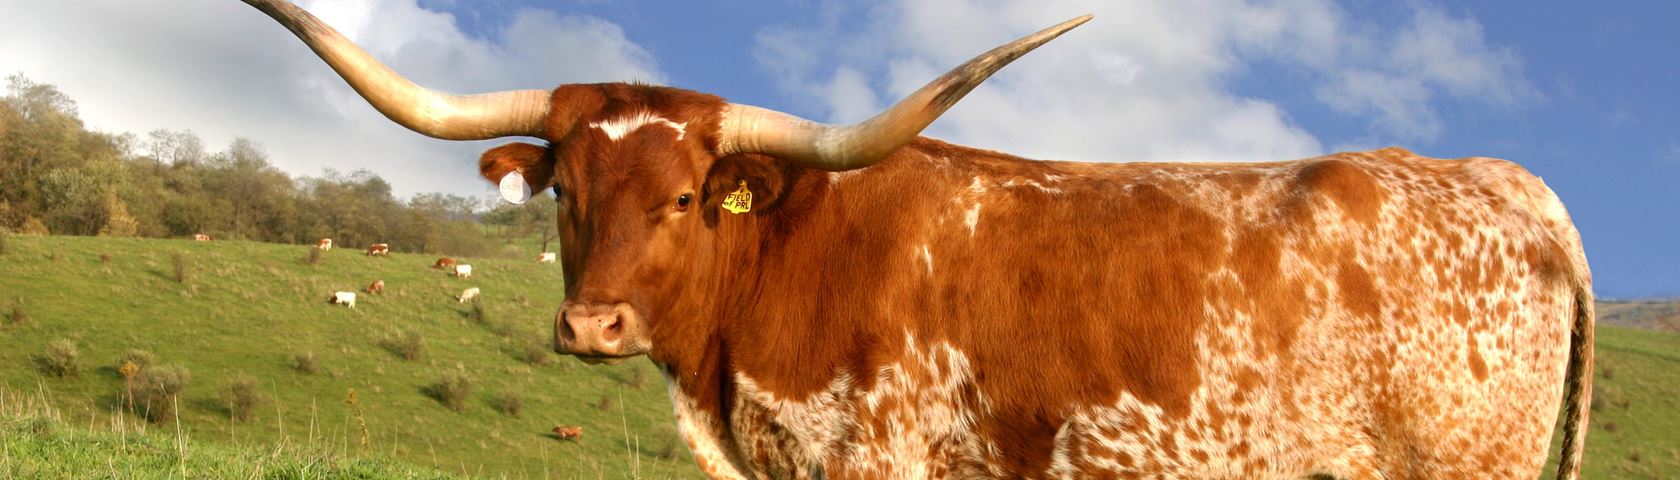 Texas Longhorn Cow - Imaginary Animal In Grasslands - HD Wallpaper 